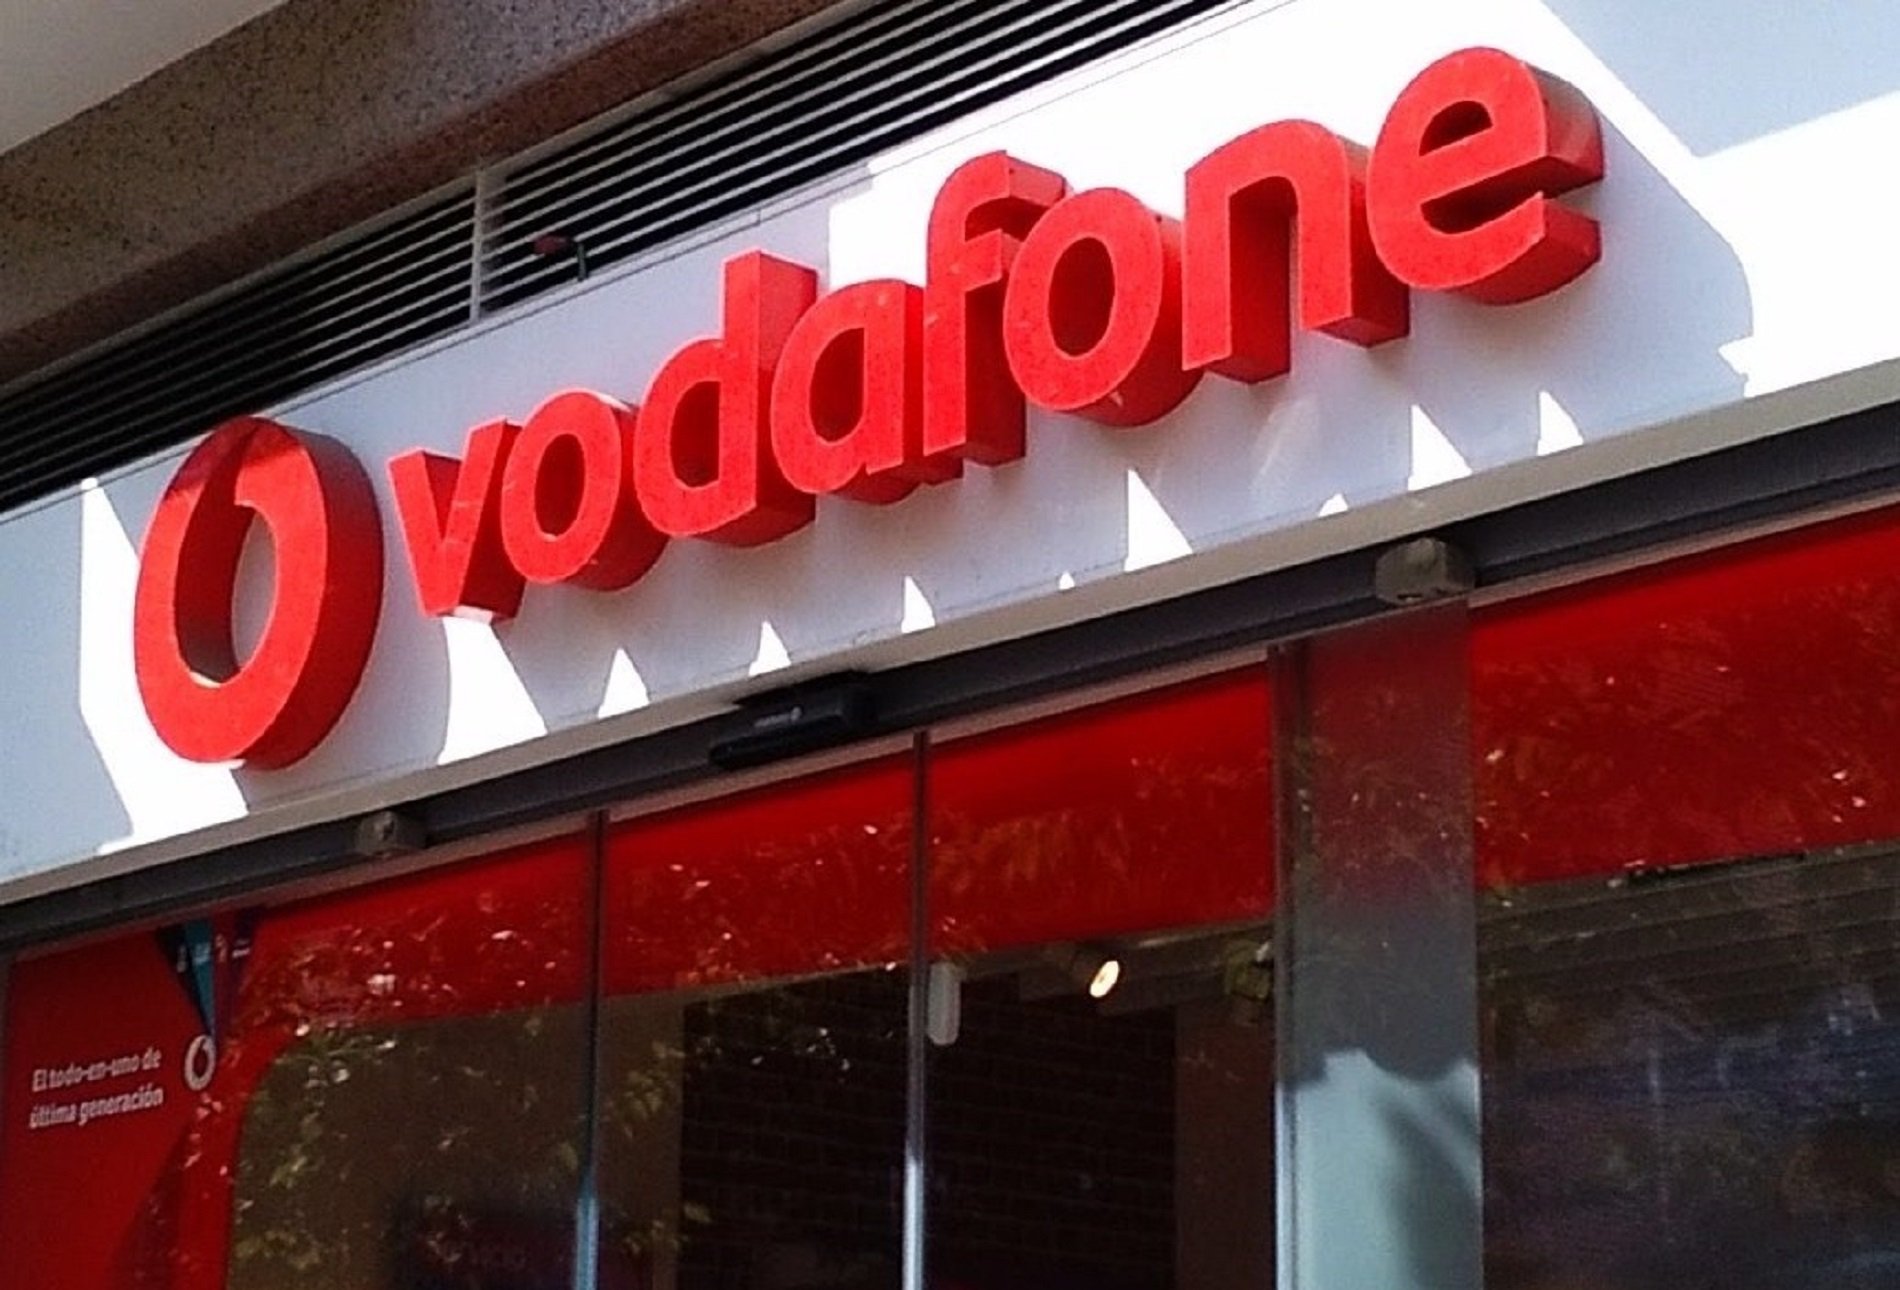 Vodafone digitaliza a las pymes para superar la crisis del Covid-19